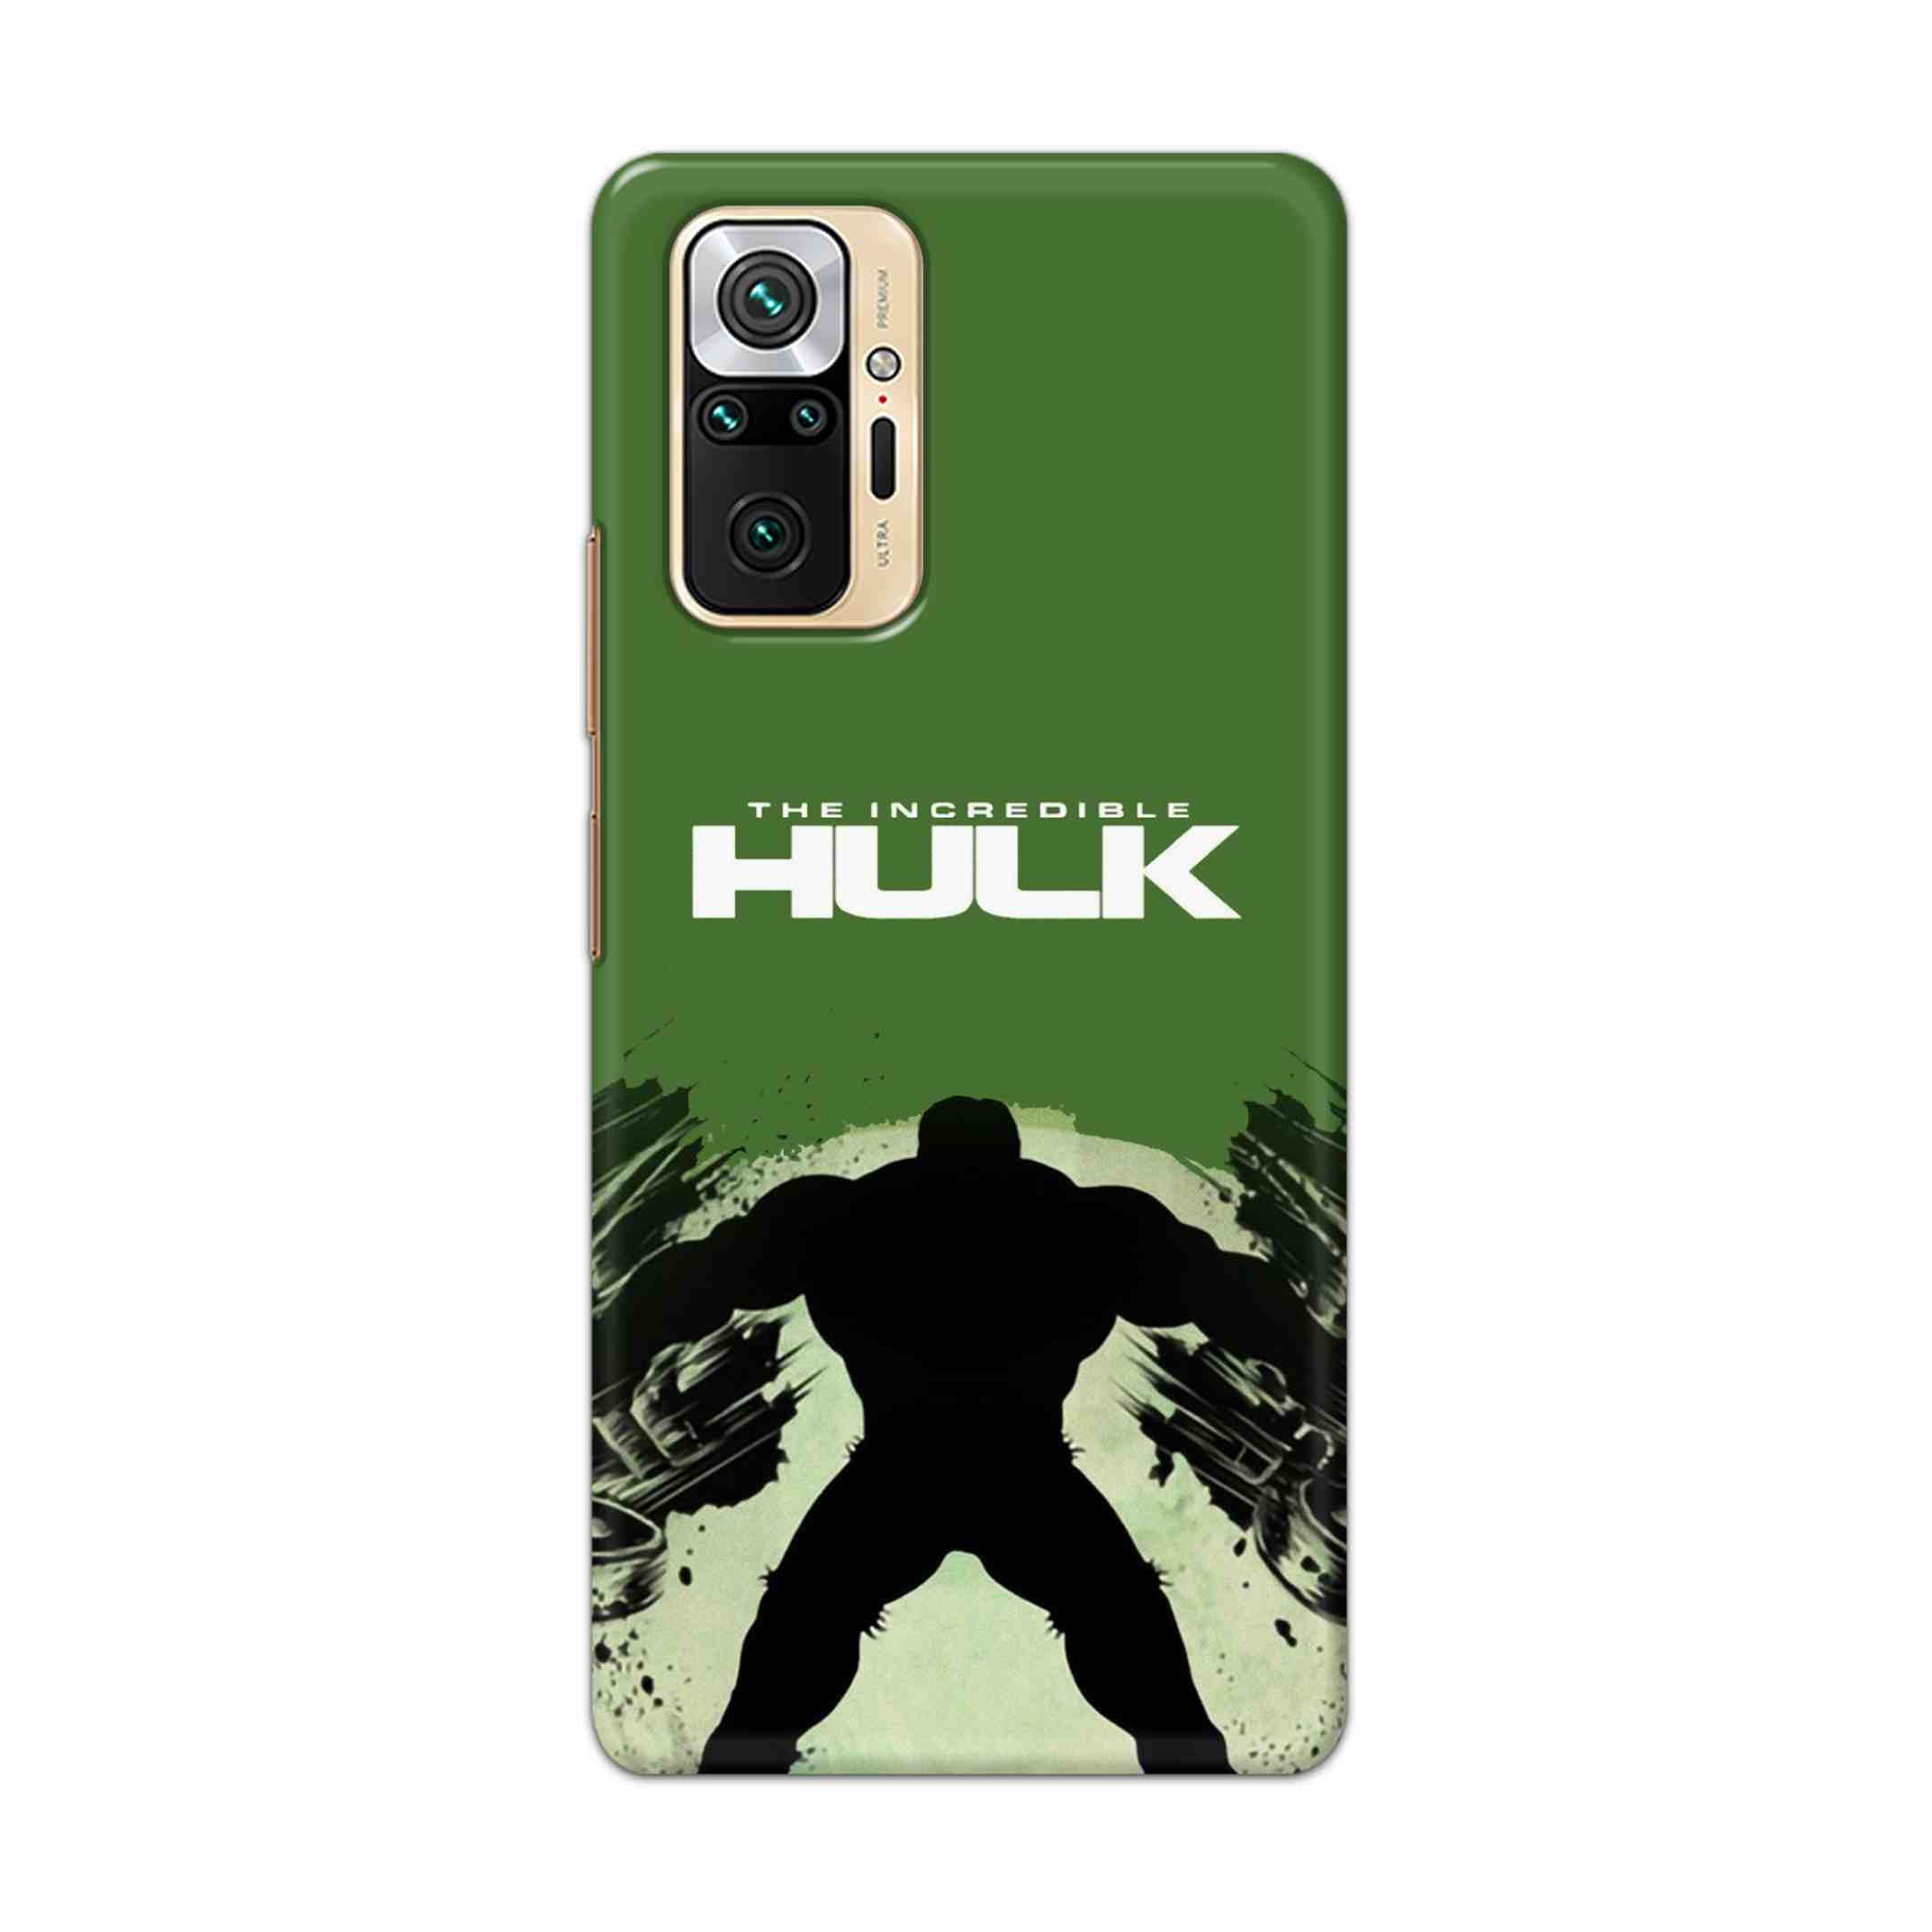 Buy Hulk Hard Back Mobile Phone Case Cover For Redmi Note 10 Pro Online